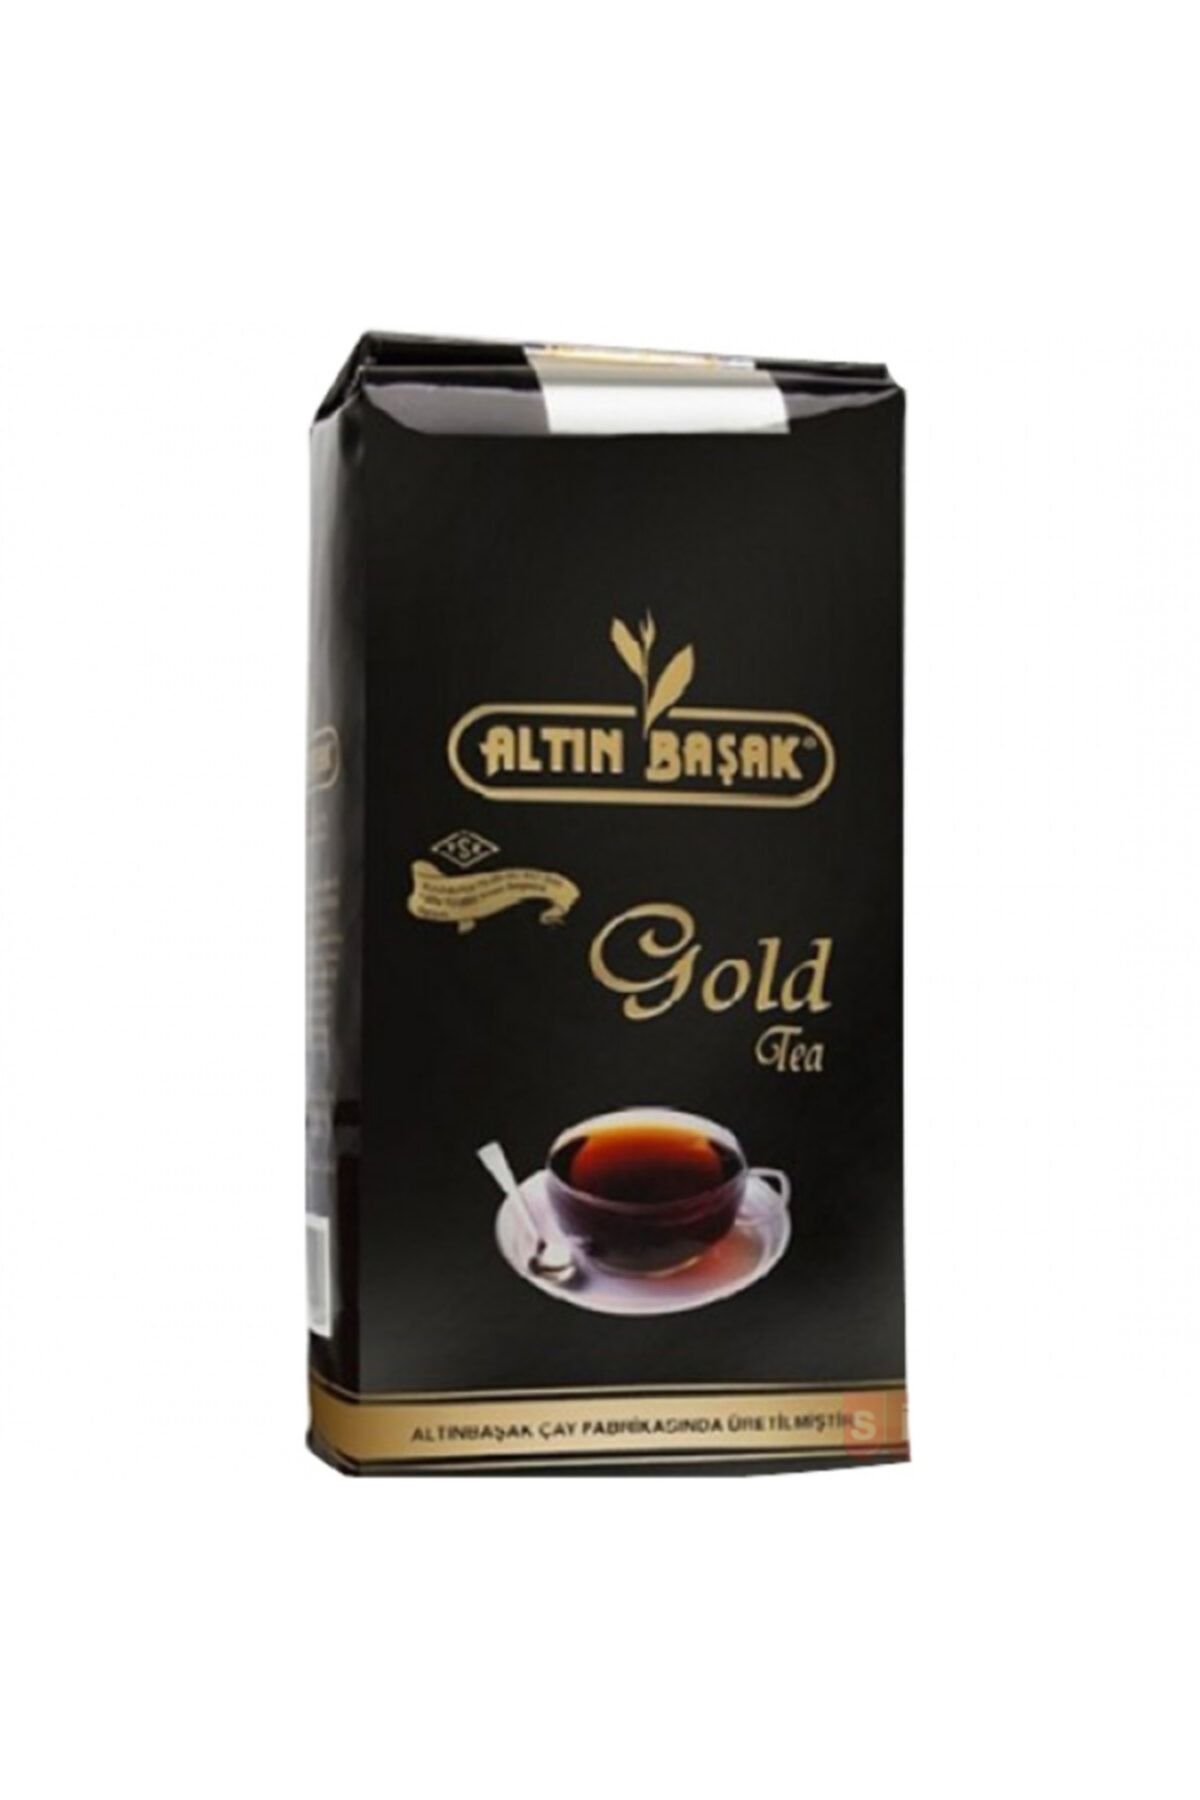 Altınbaşak Altın Başak Gold Tea Siyah Çay 5kg - 2'li Koli